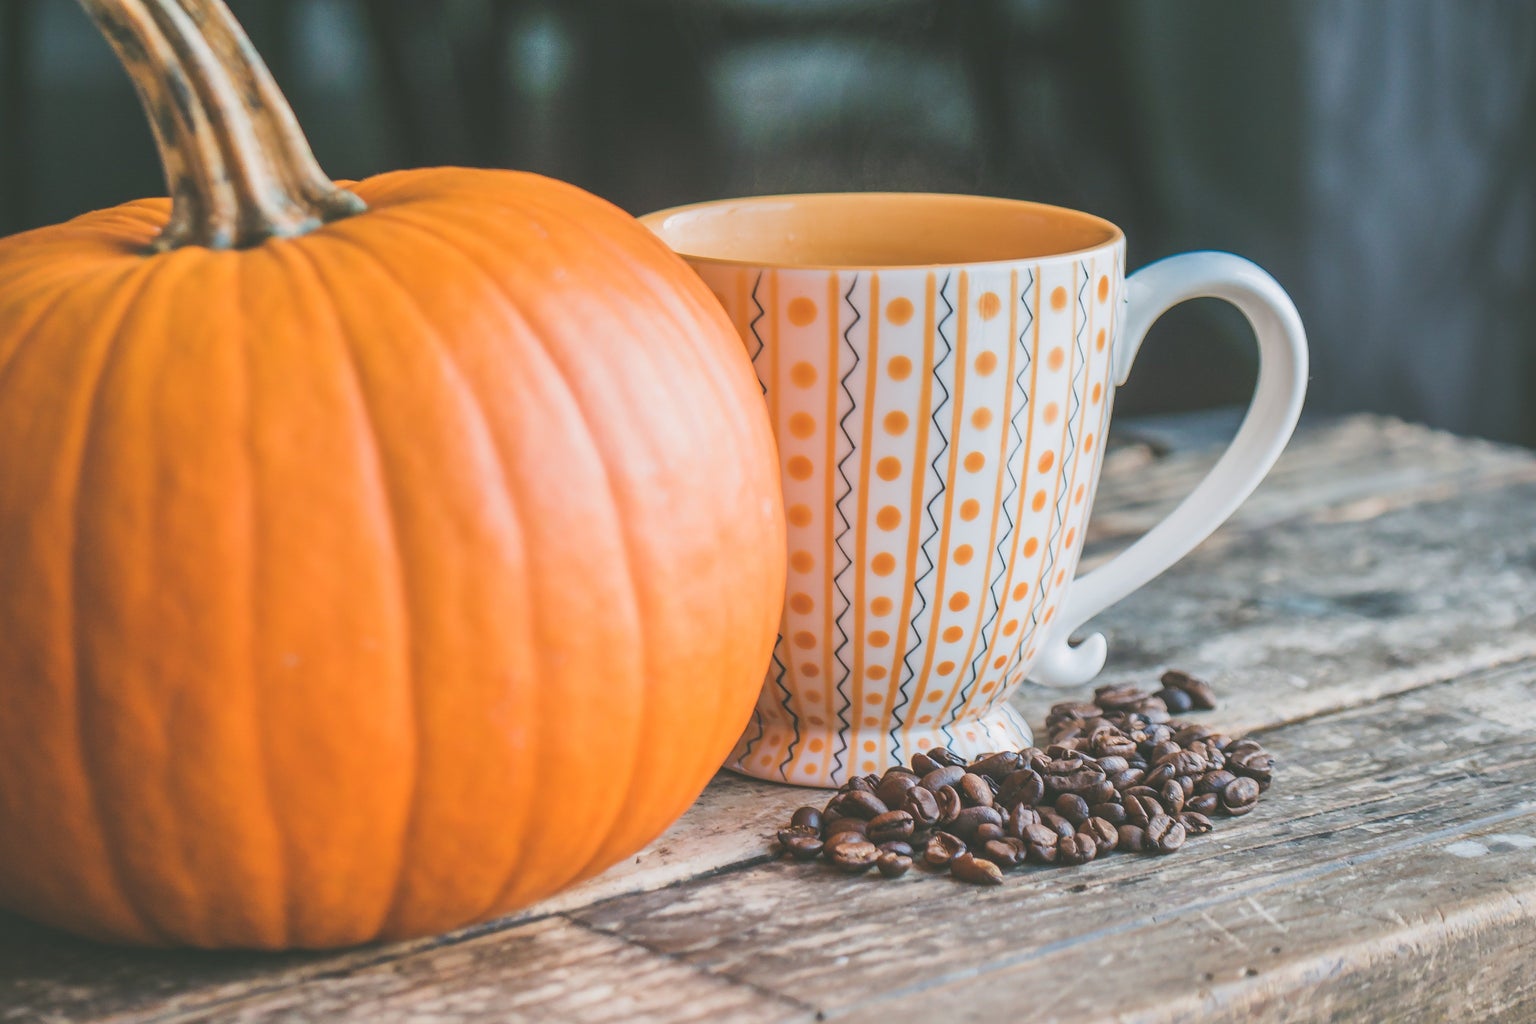 pumpkin and mug with coffee grounds